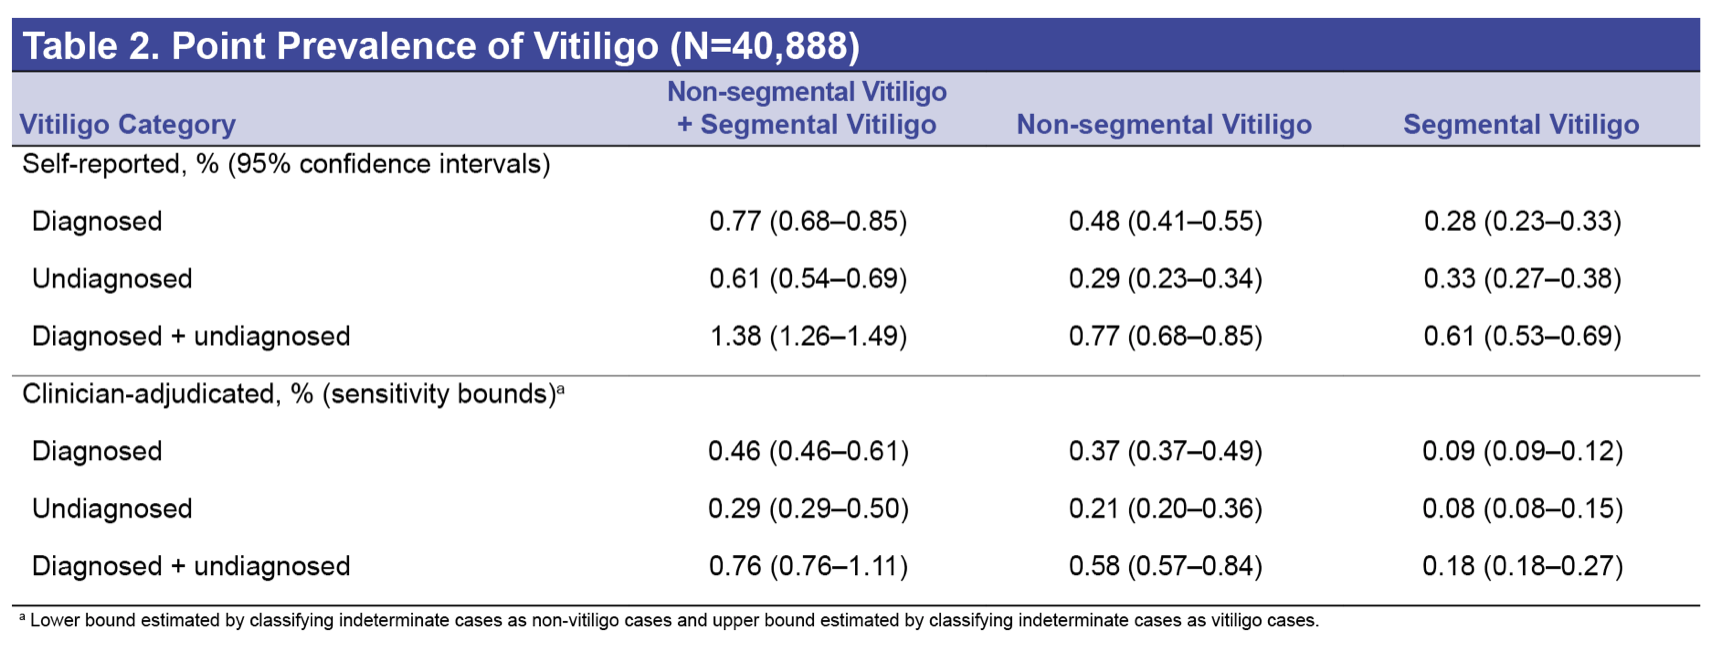 Prevalence-of-Vitiligo-in-the-United-States-Table-2